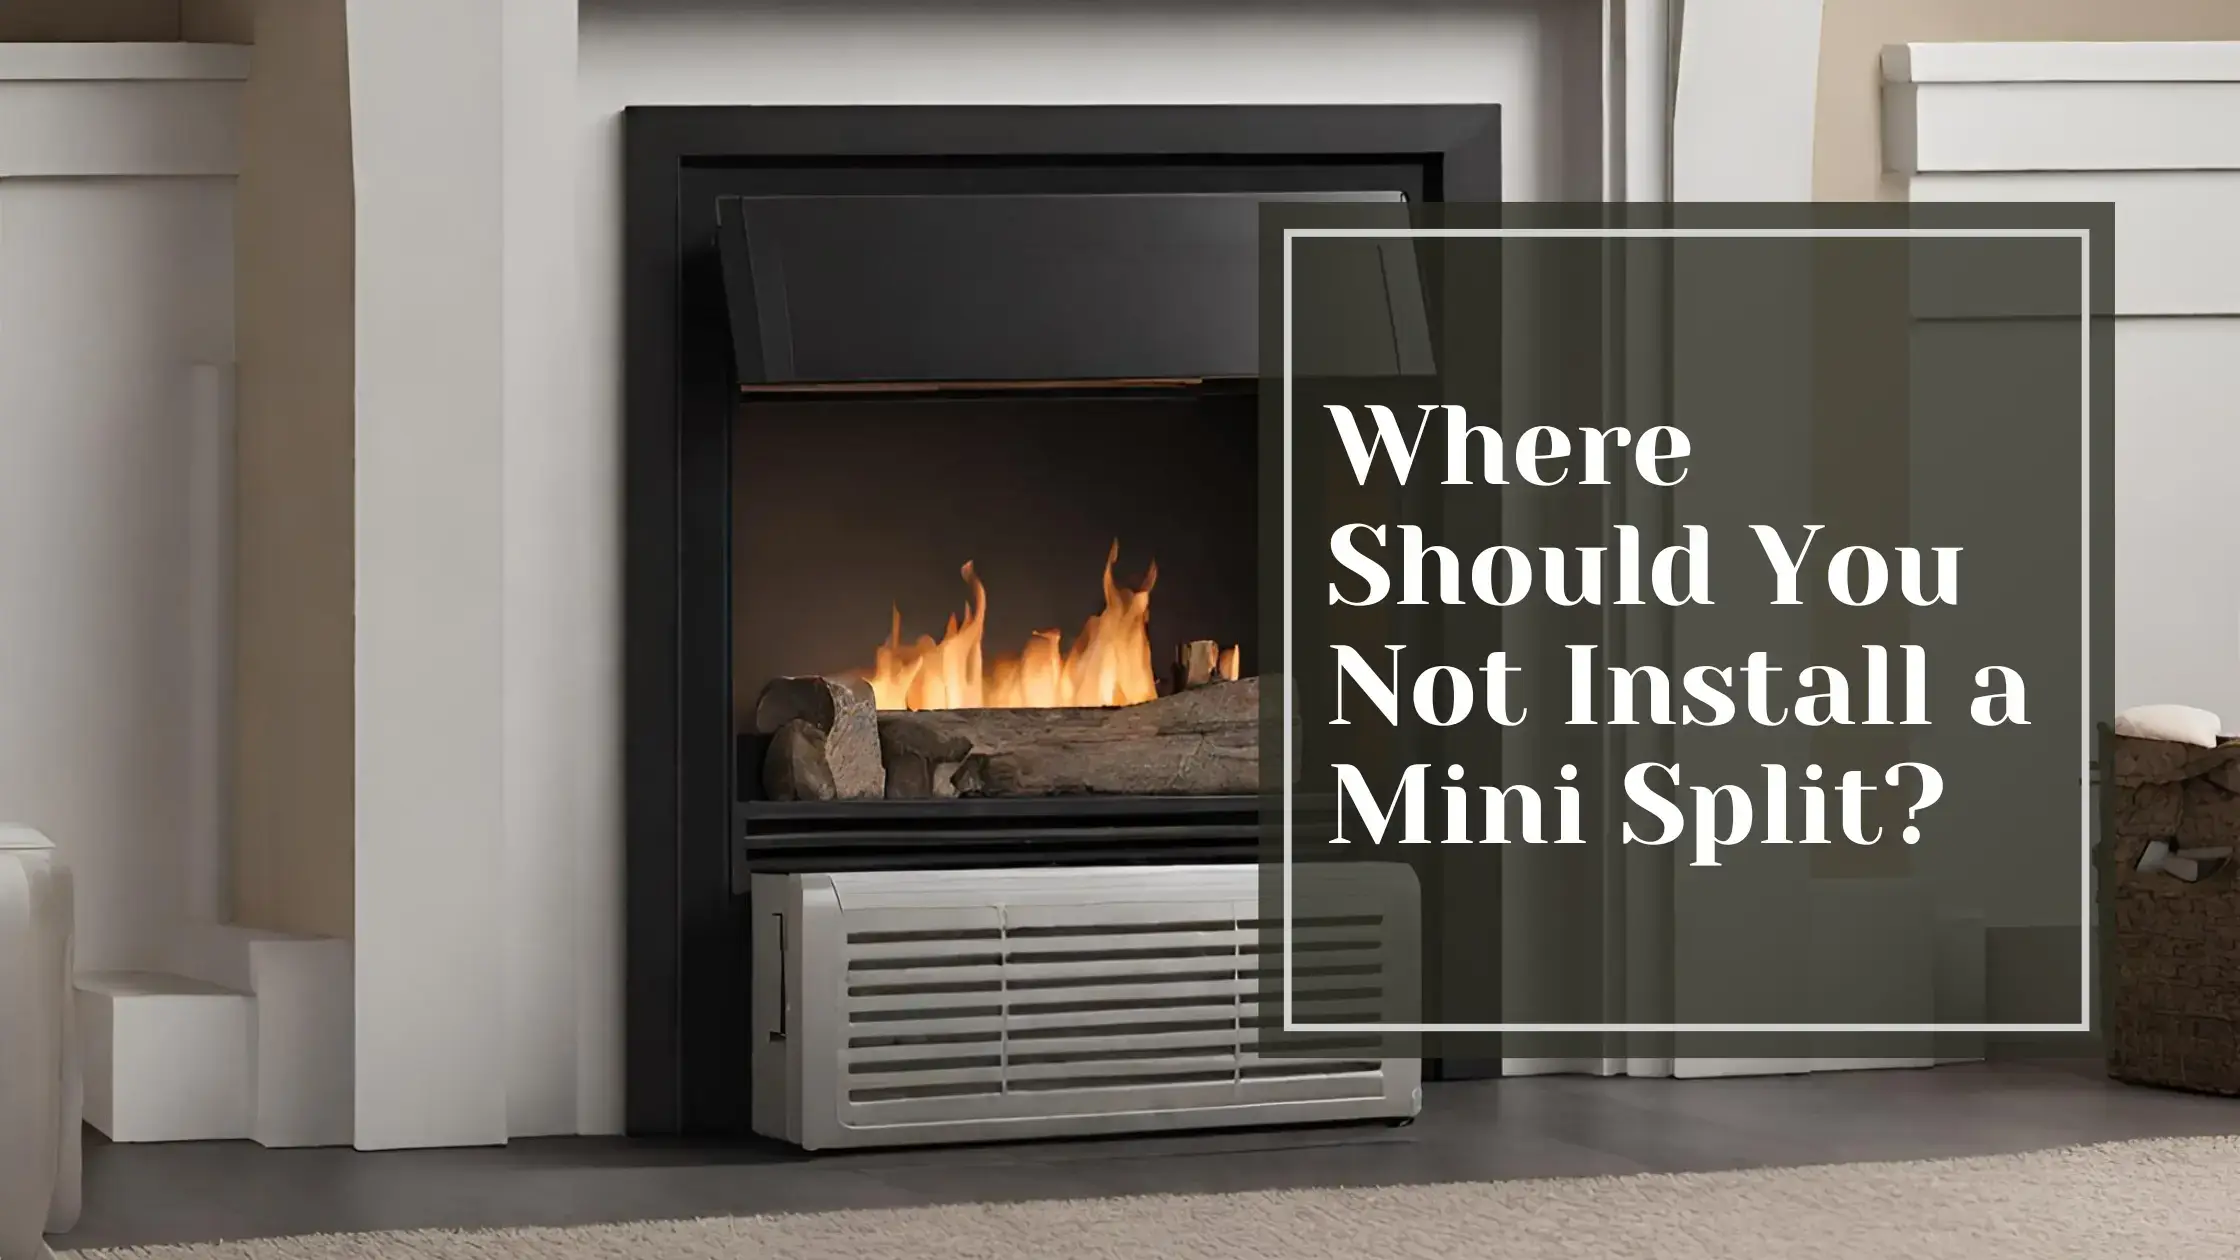 Where Should You Not Install a Mini Split?